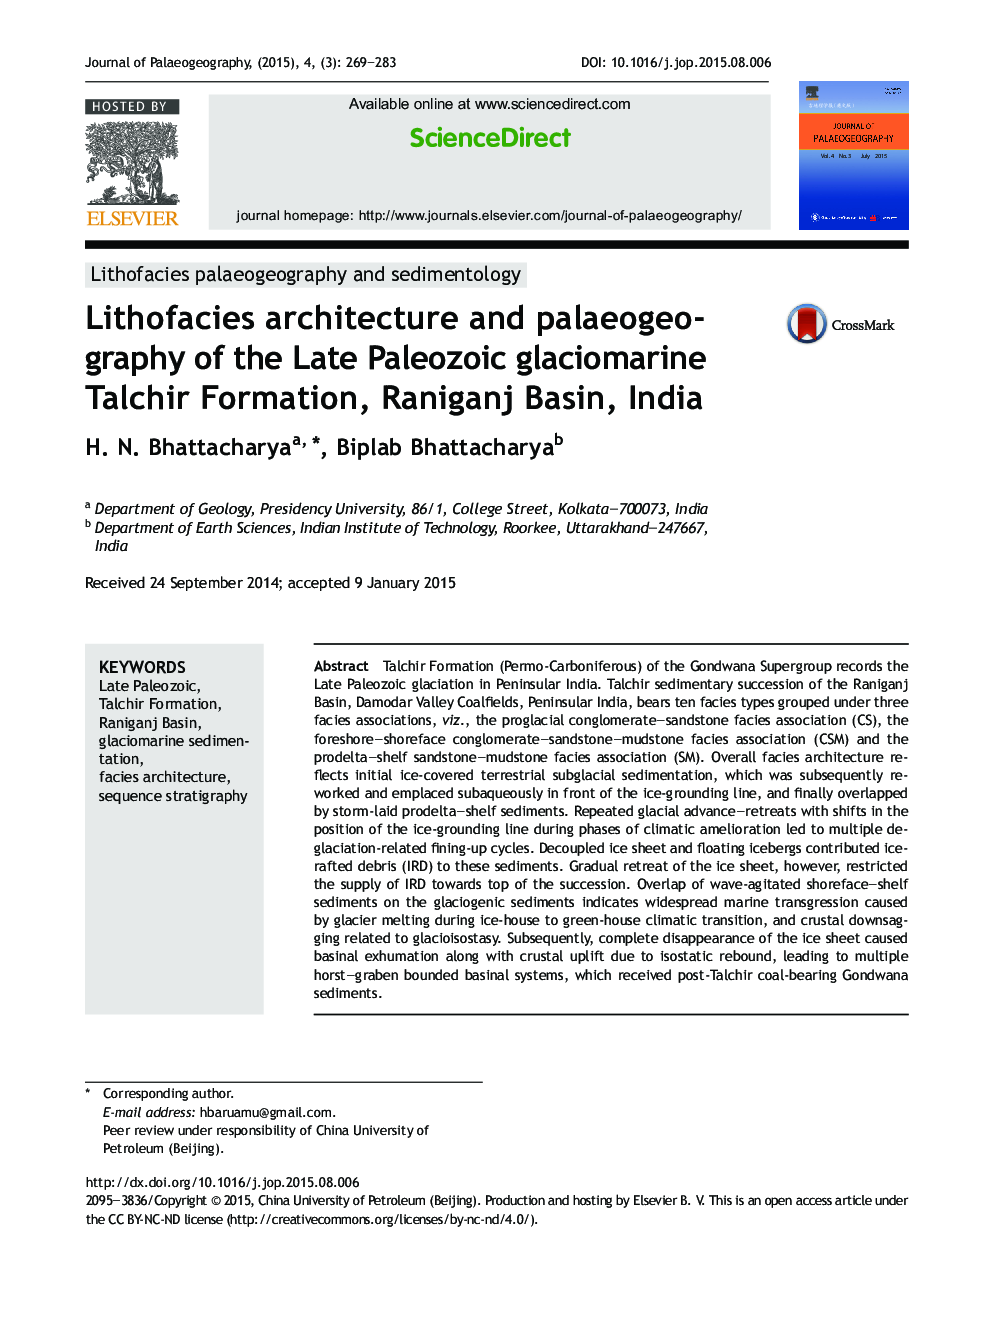 Lithofacies architecture and palaeogeography of the Late Paleozoic glaciomarine Talchir Formation, Raniganj Basin, India 